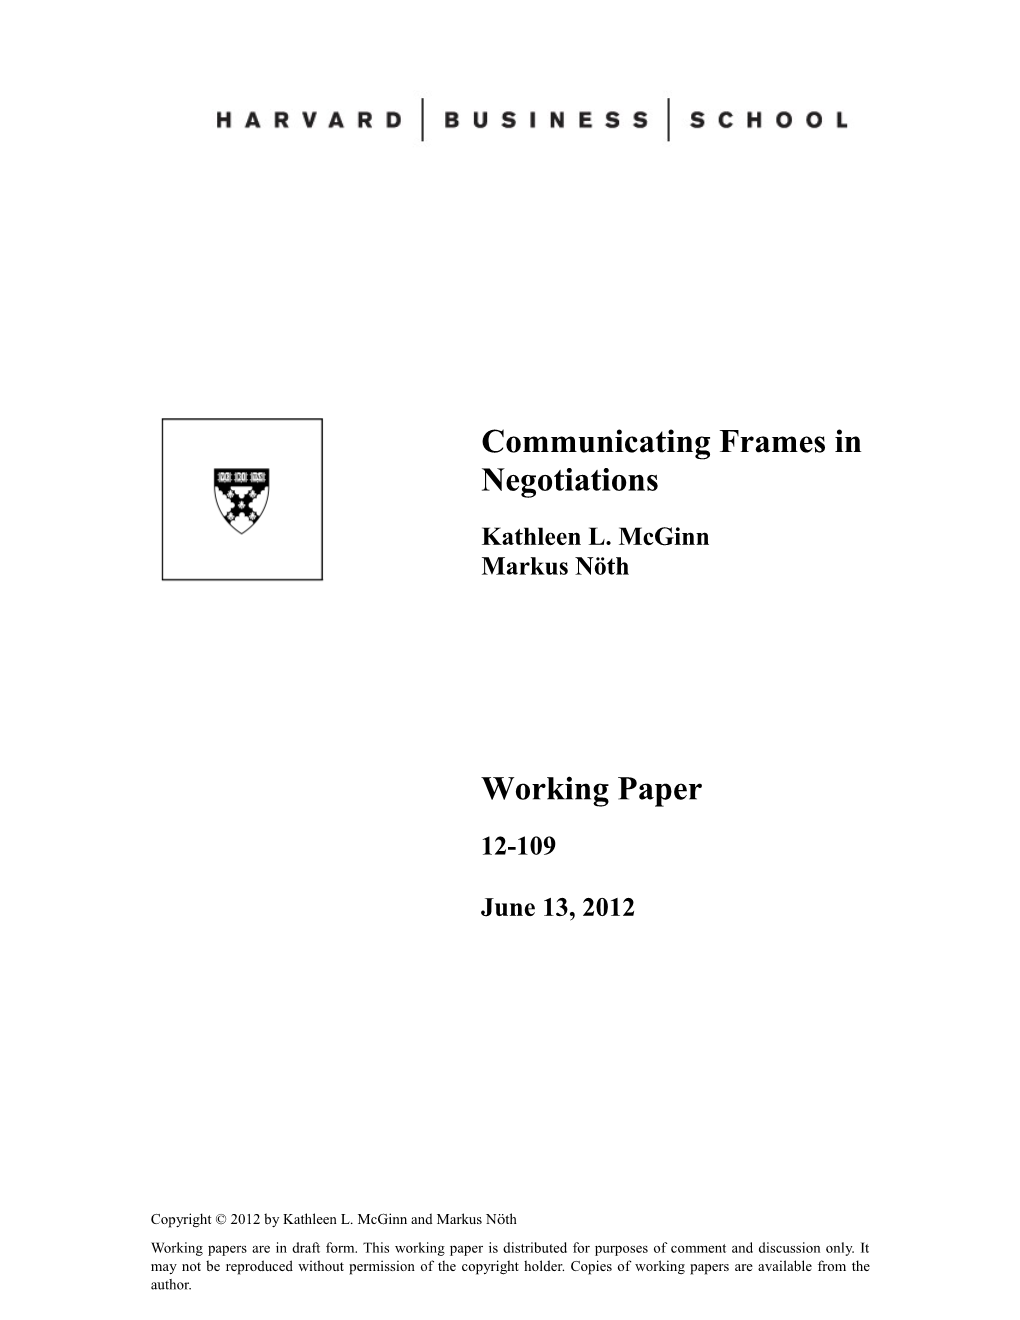 Endogenous Framing Via Communication in Negotiations